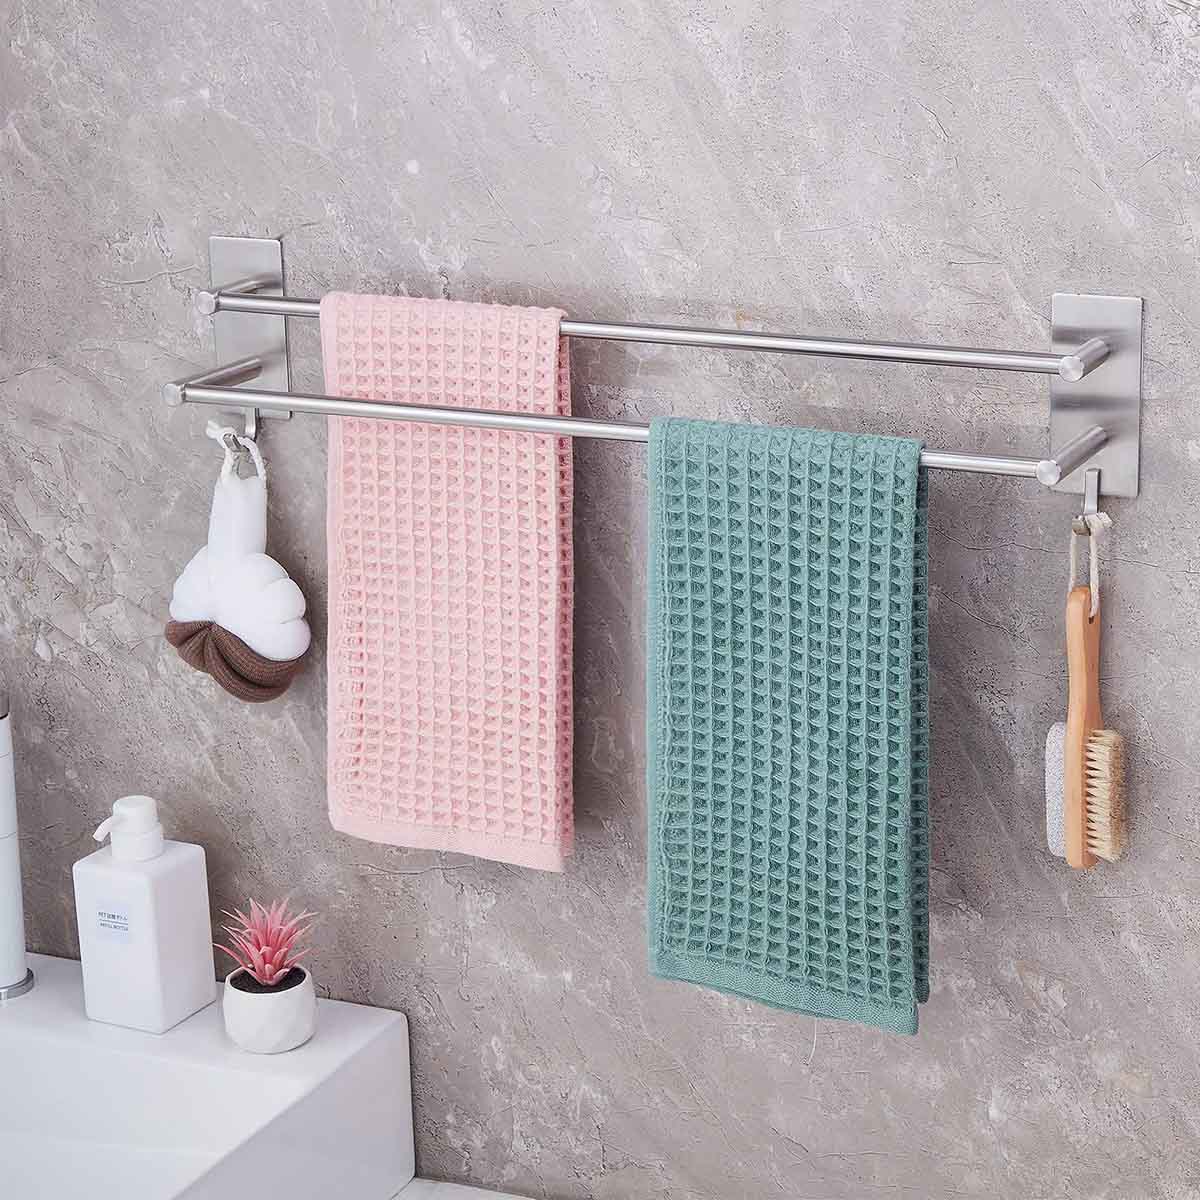 Where To Put A Towel Bar In Bathroom